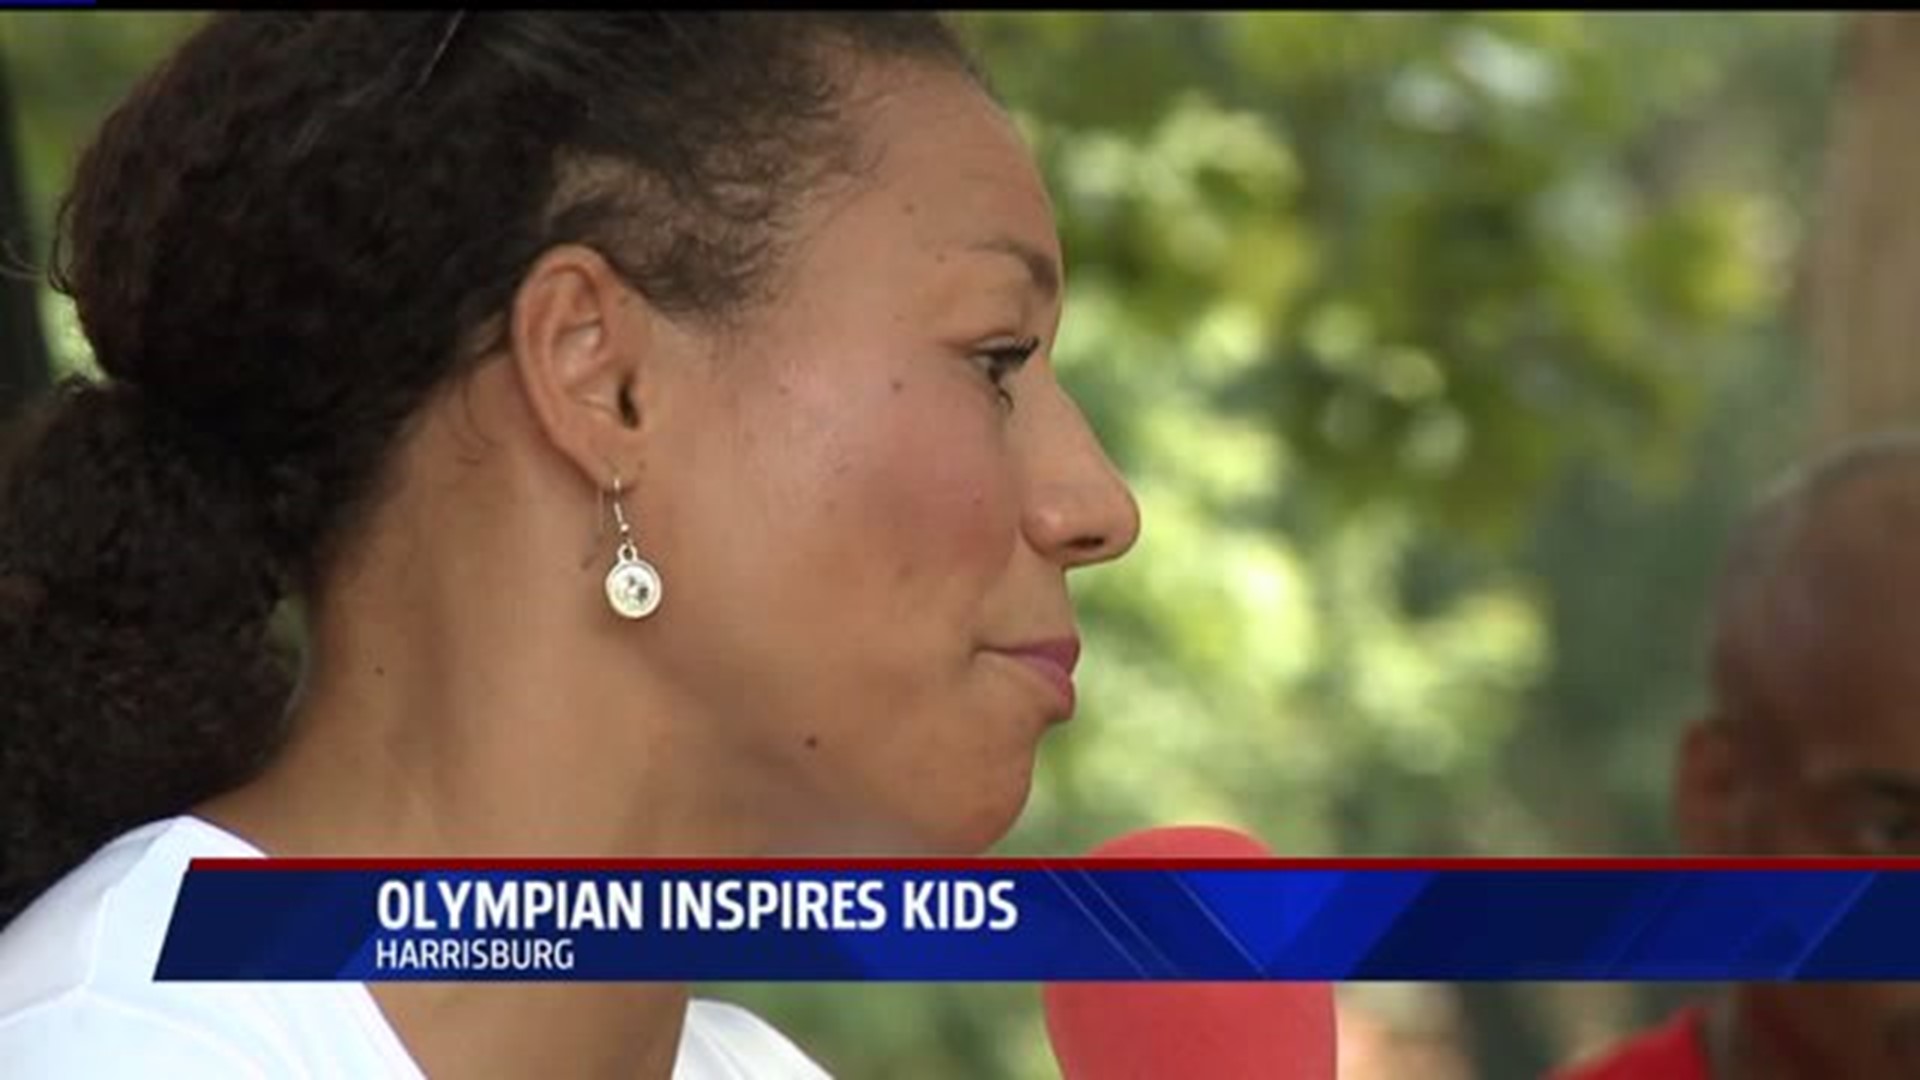 Olympic Silver Medal Winner visits Harrisburg to inspire kids